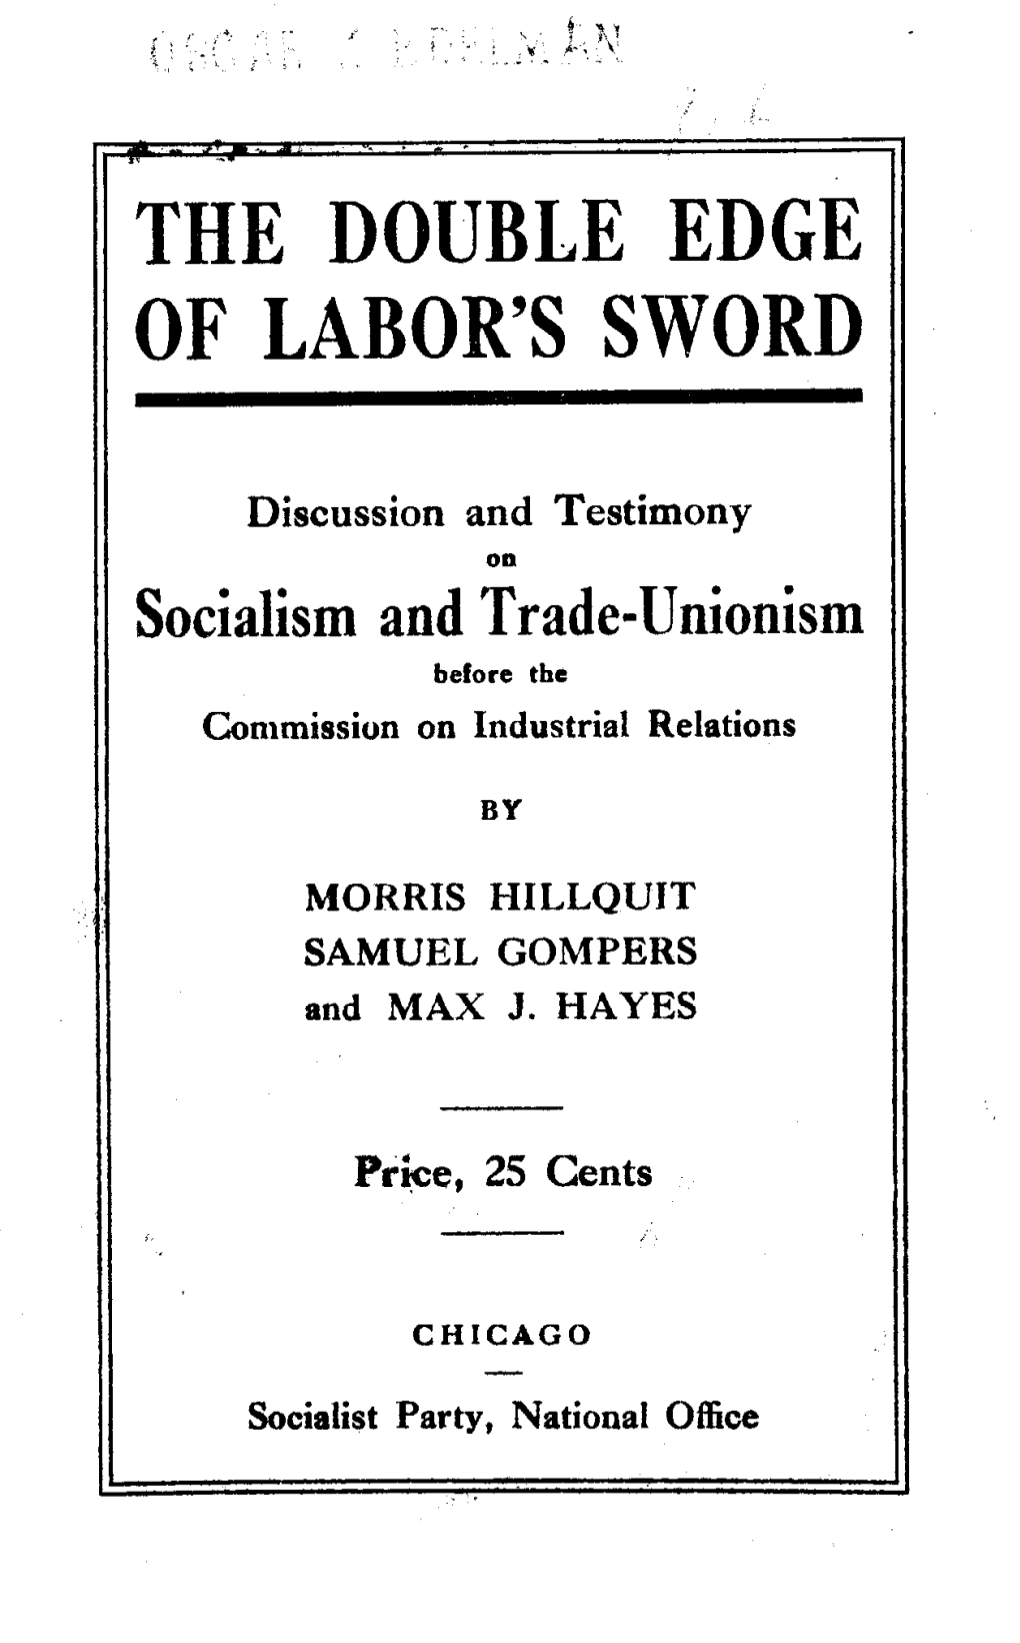 The Double Edge of Labor's Sword